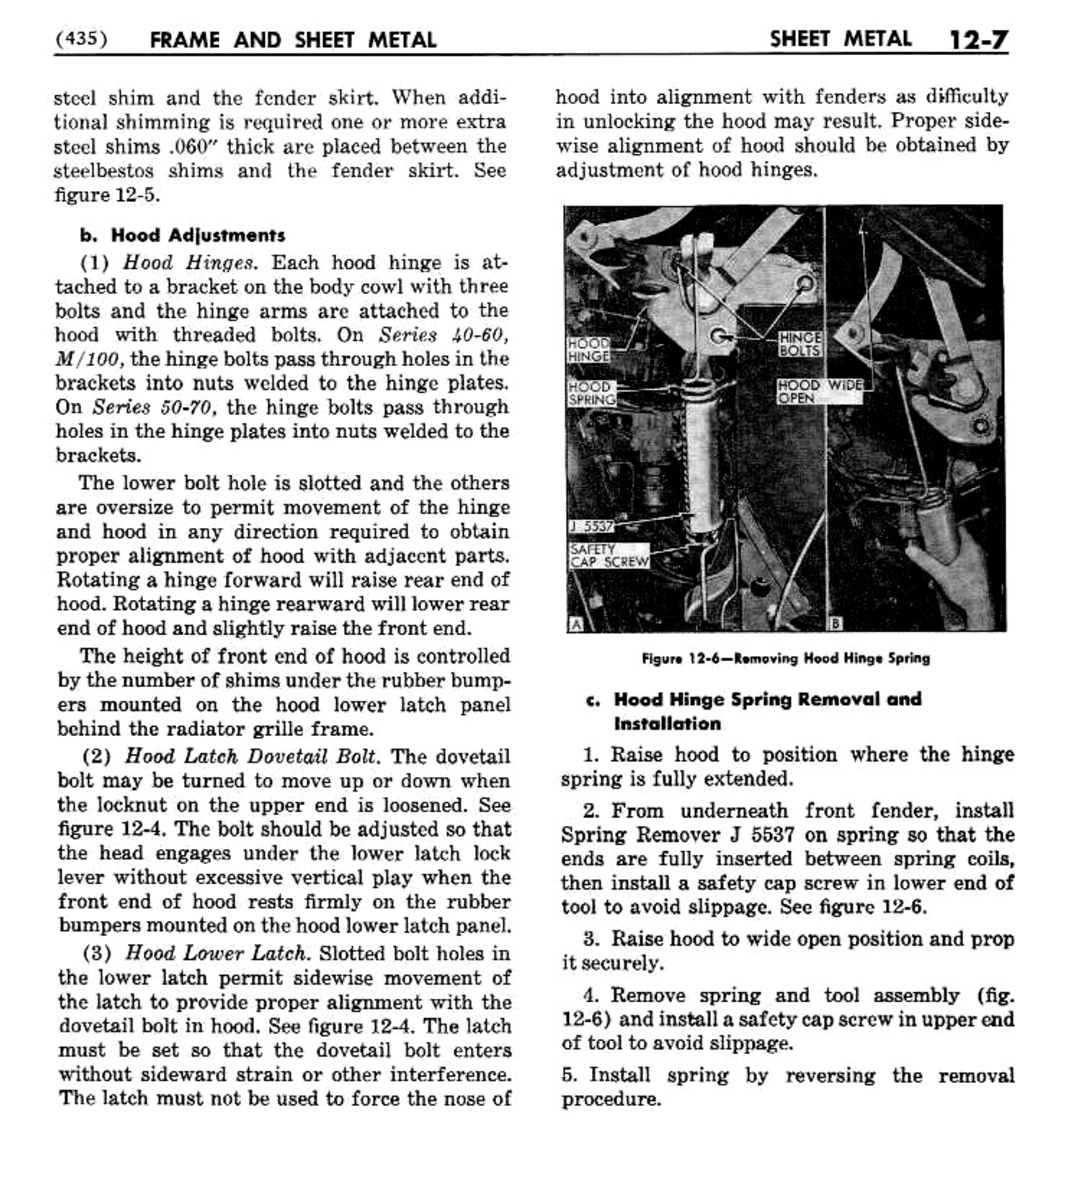 n_13 1954 Buick Shop Manual - Sheet Metal-007-007.jpg